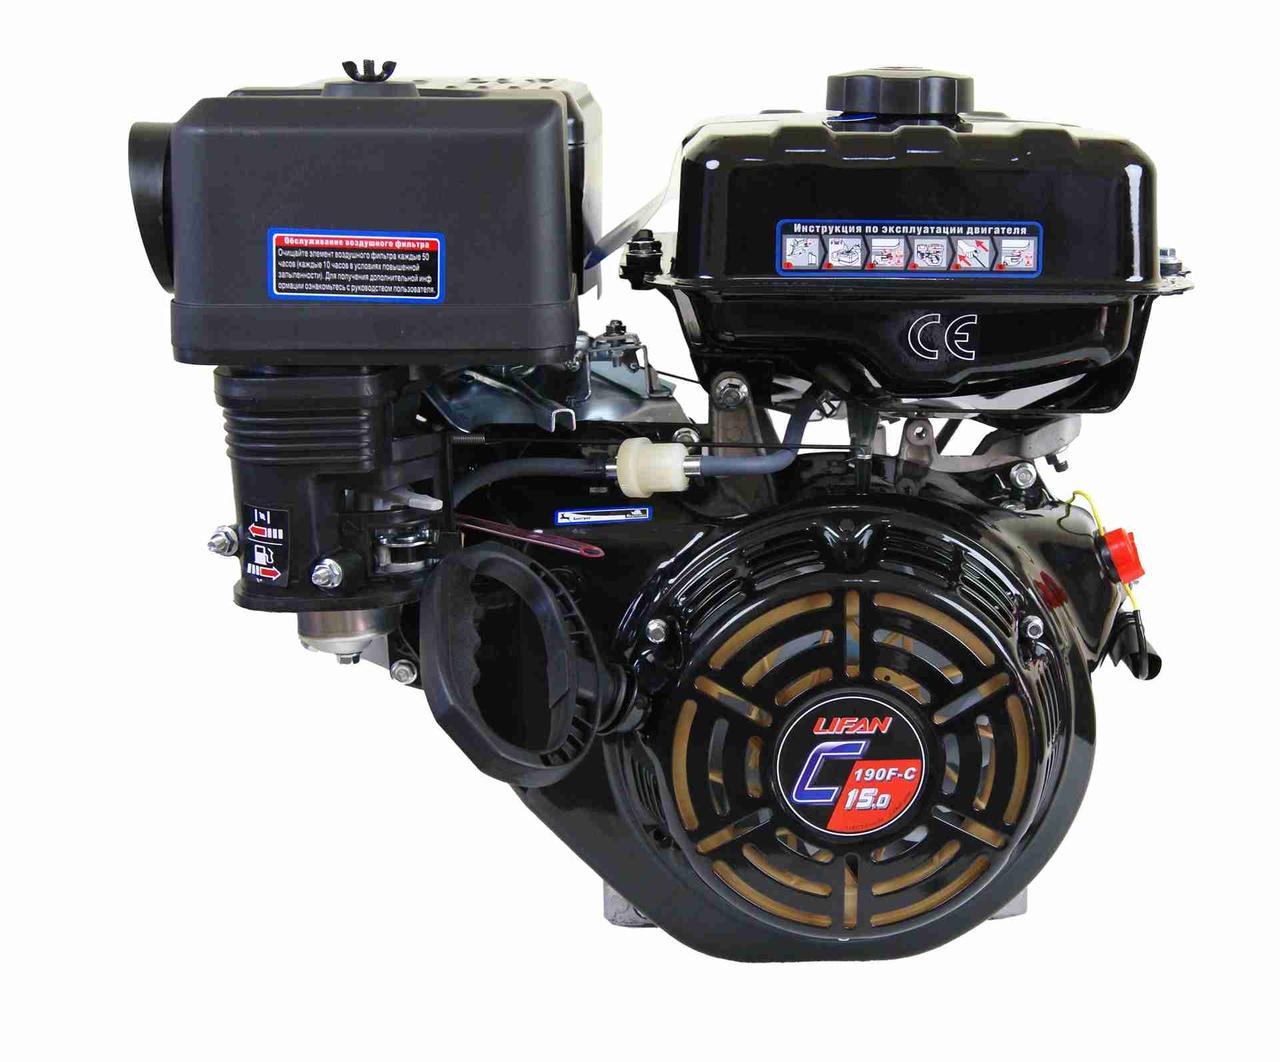 Двигатель LIFAN 190FD-C PRO (15 л.с., вал 25мм, эл. стартер)